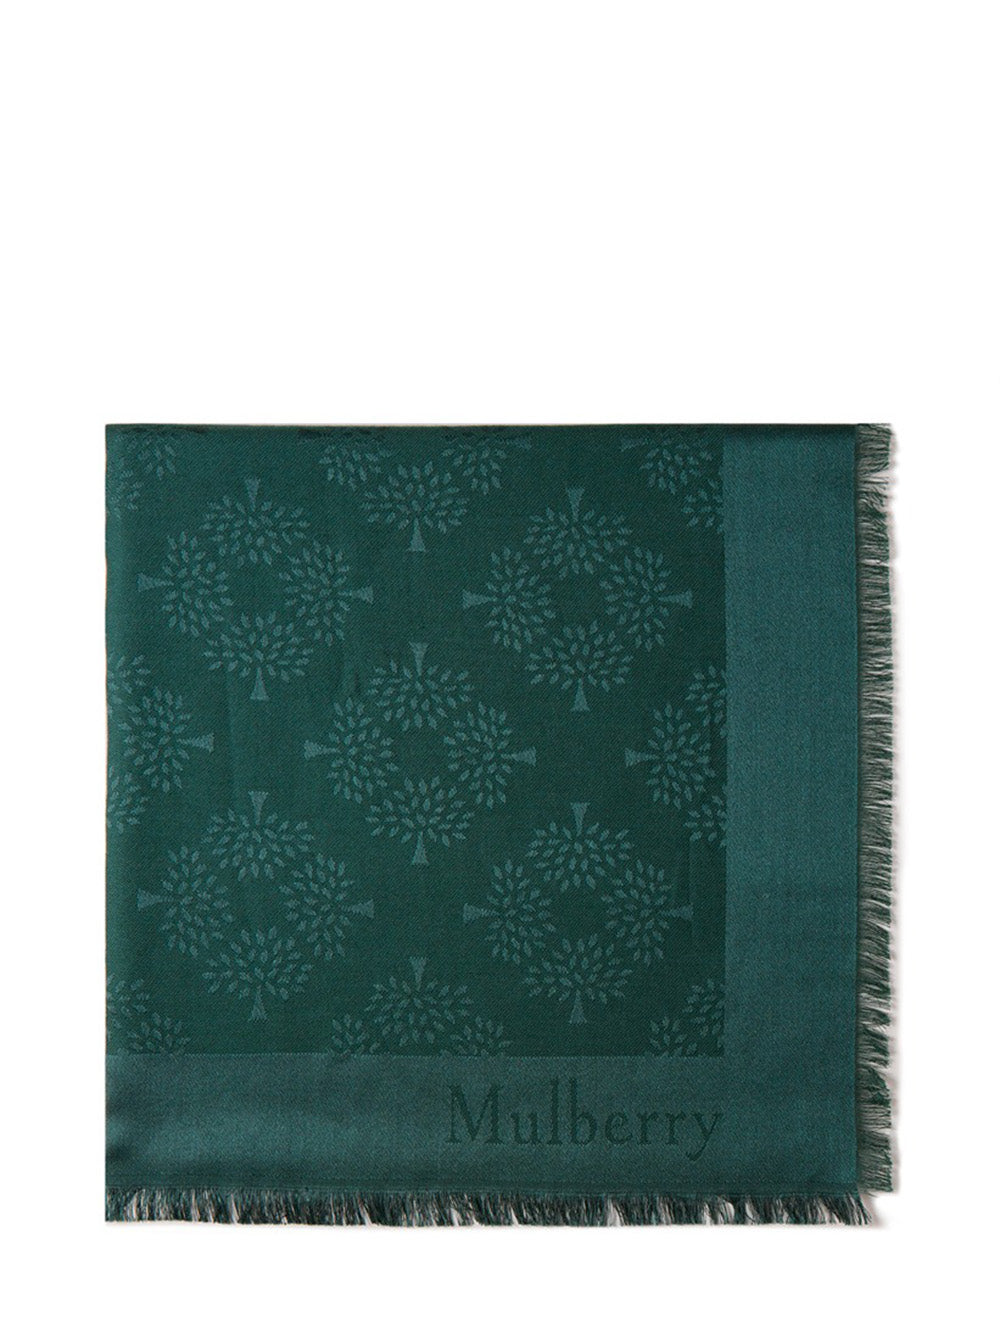     MulberryTreeScarf-MulberryGreen-1